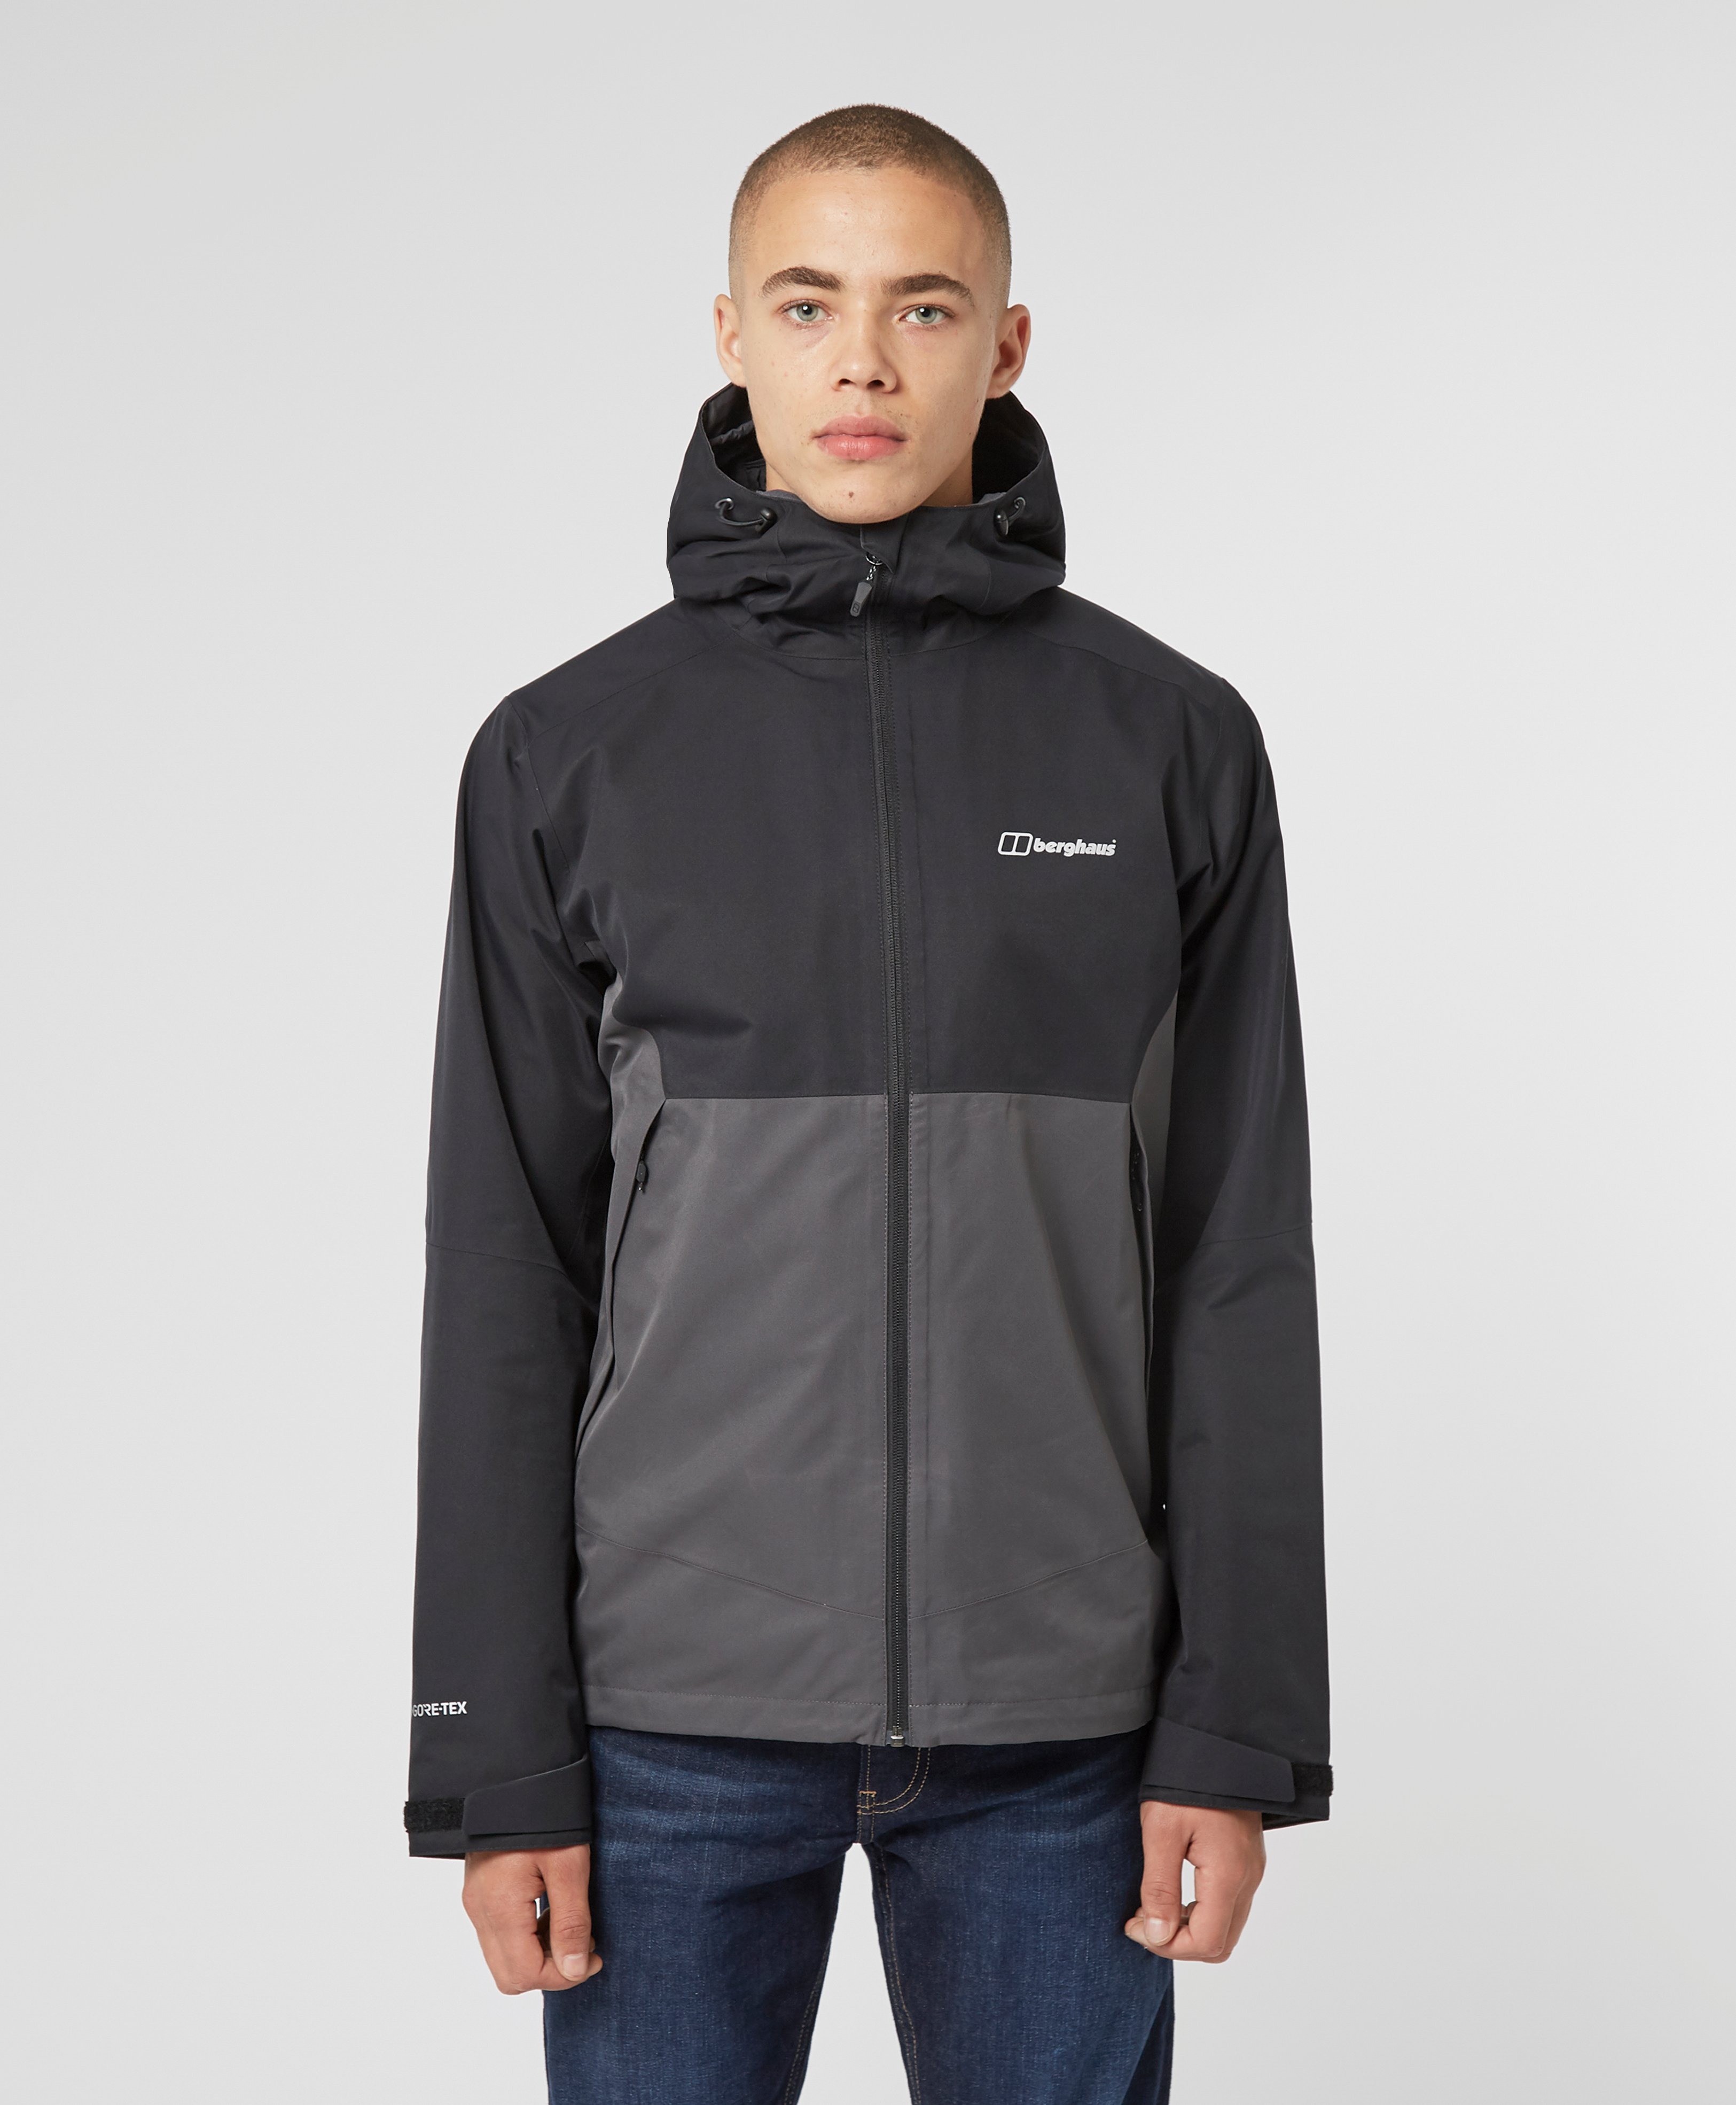 Berghaus Fellmaster Waterproof Gore-Tex Jacket | scotts Menswear